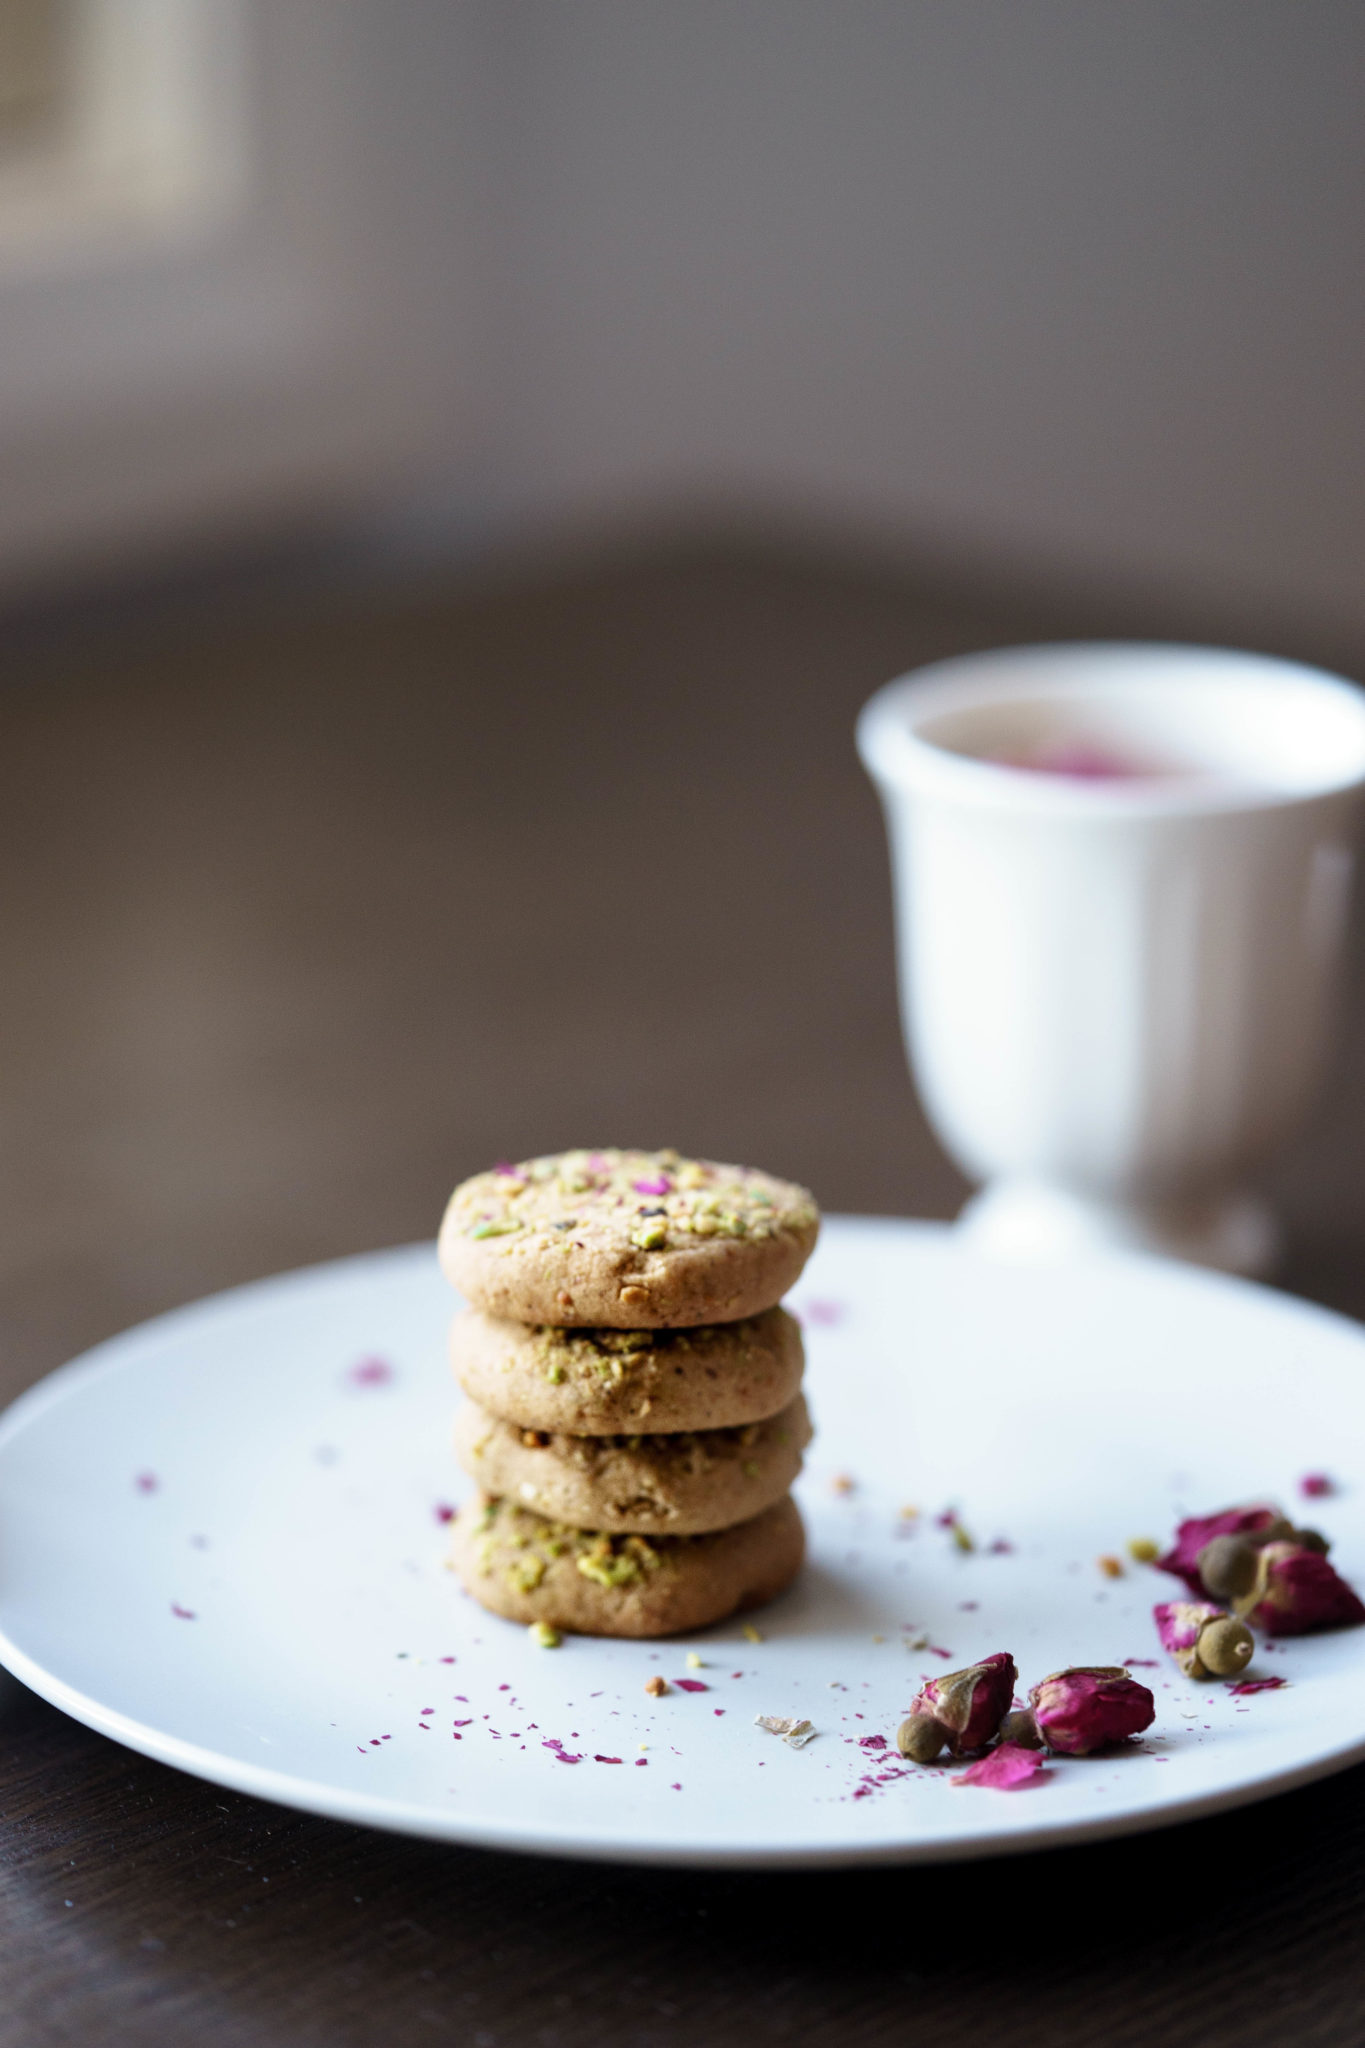 Cardamom pistachio cookies with rose petals